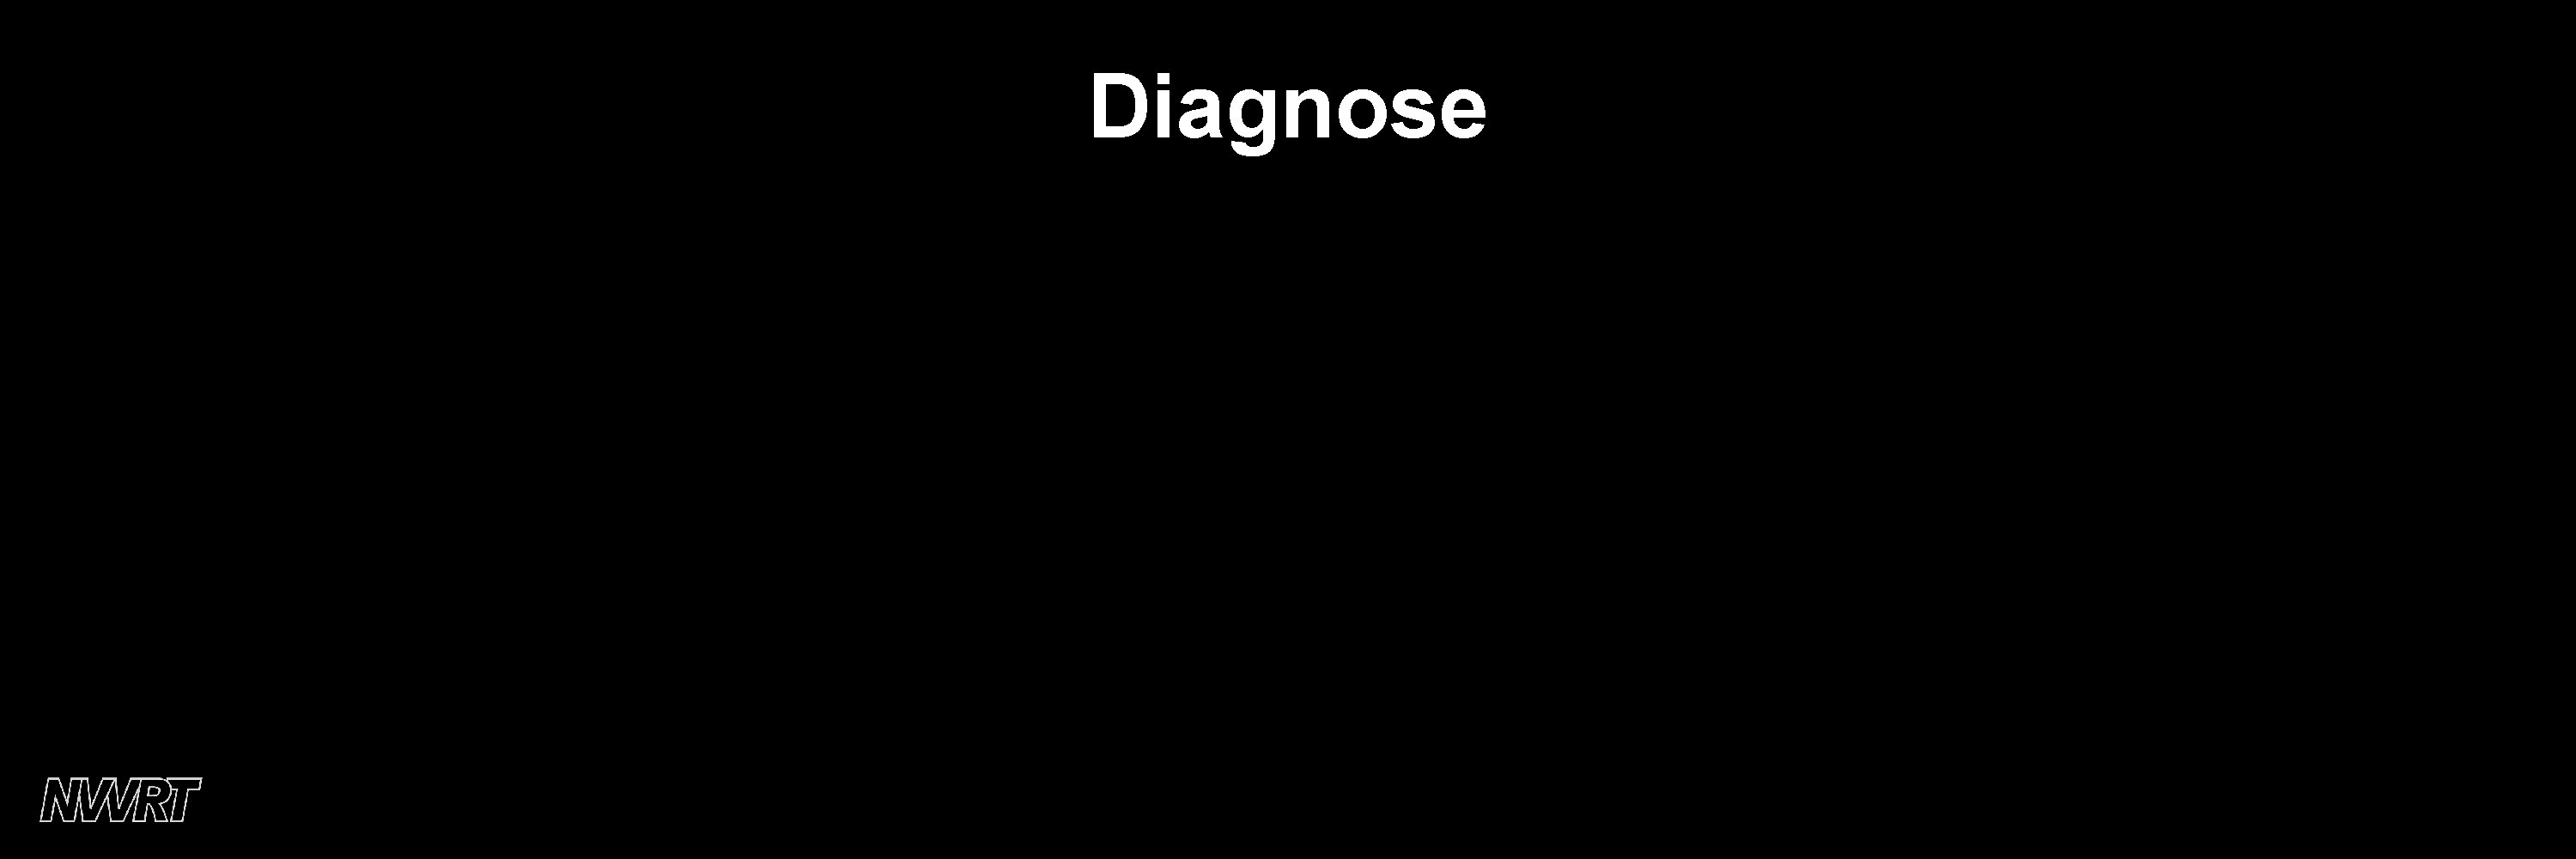 Diagnose 